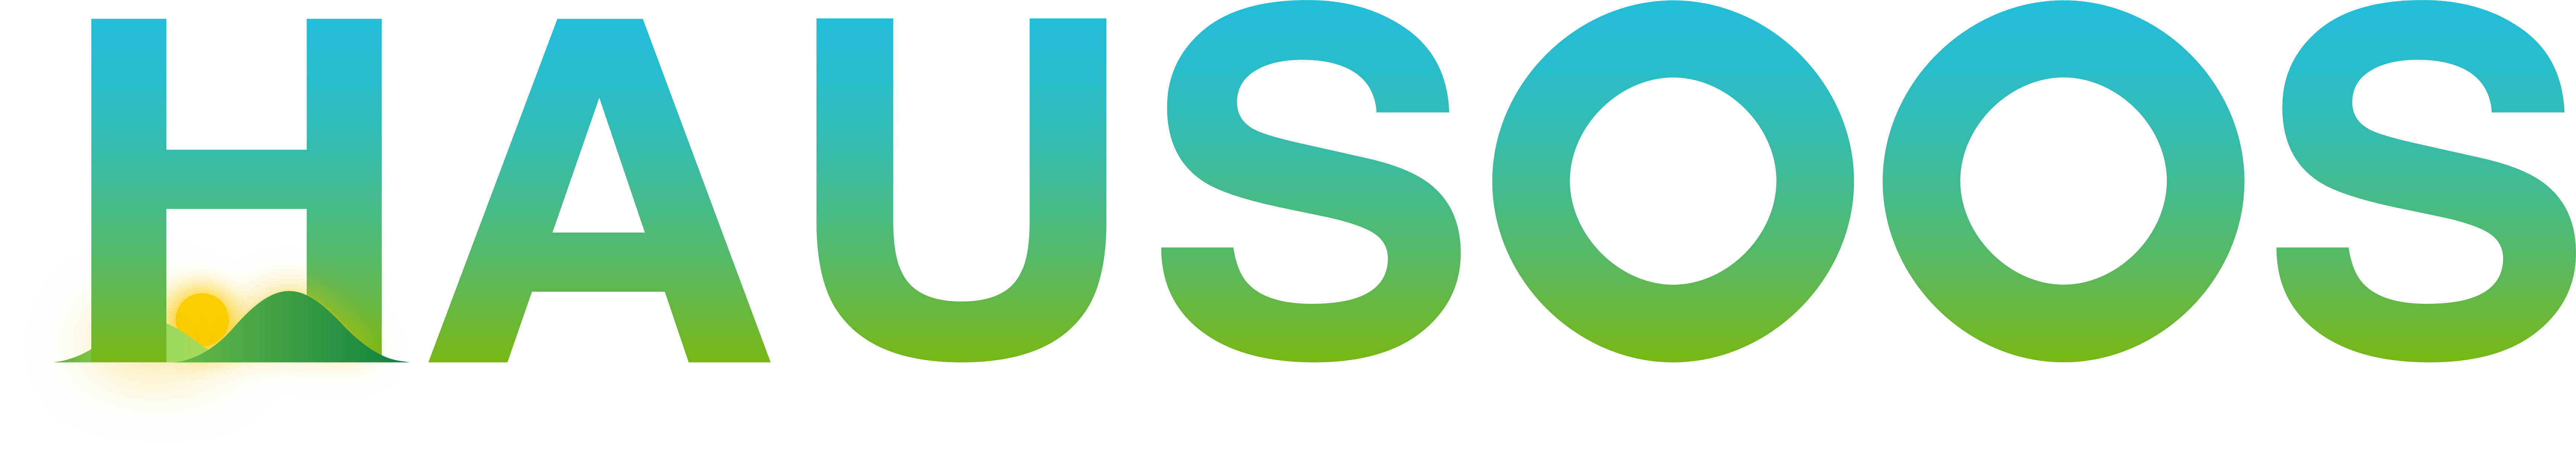 HAUSOOS full logo in colours